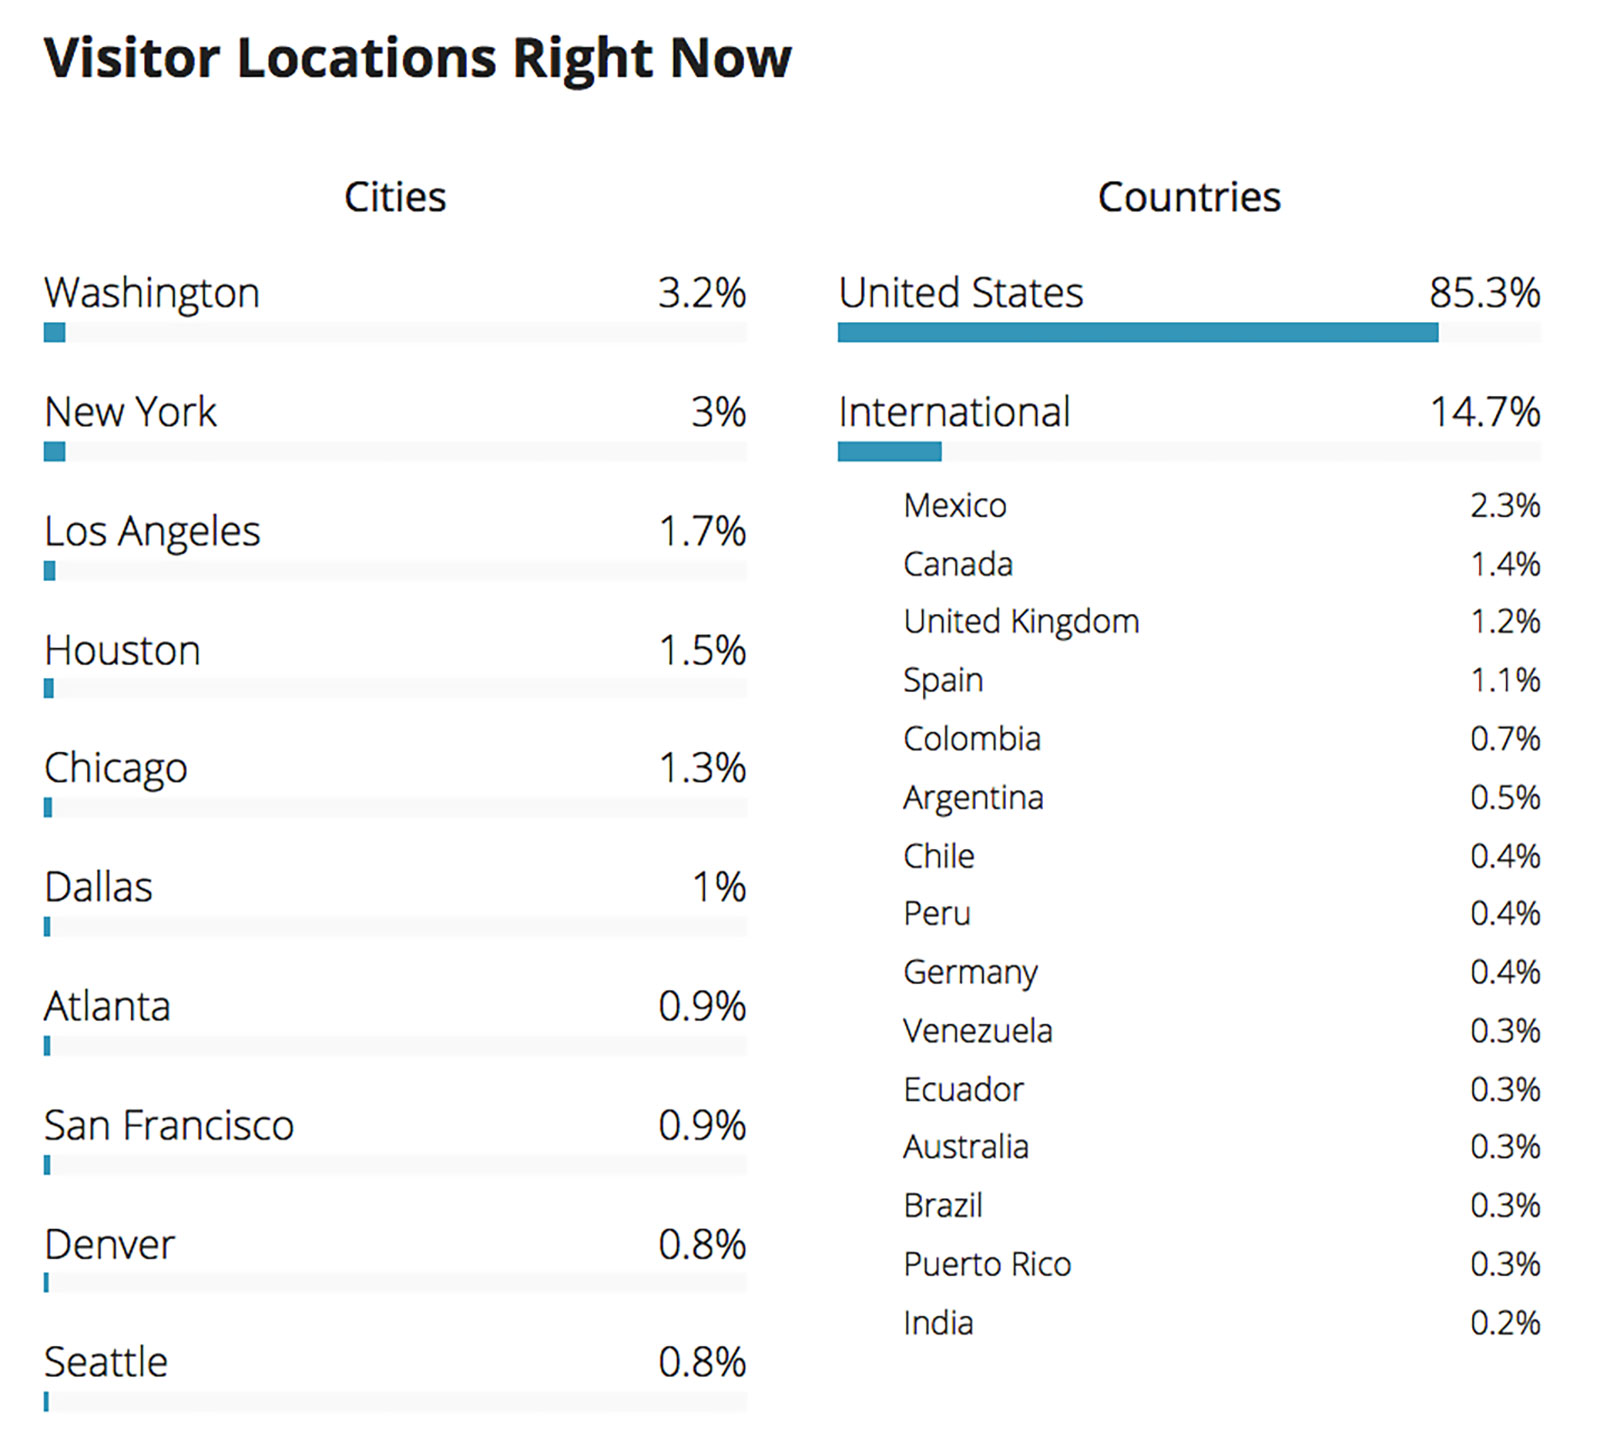 A snapshot of location data from analytics.usa.gov